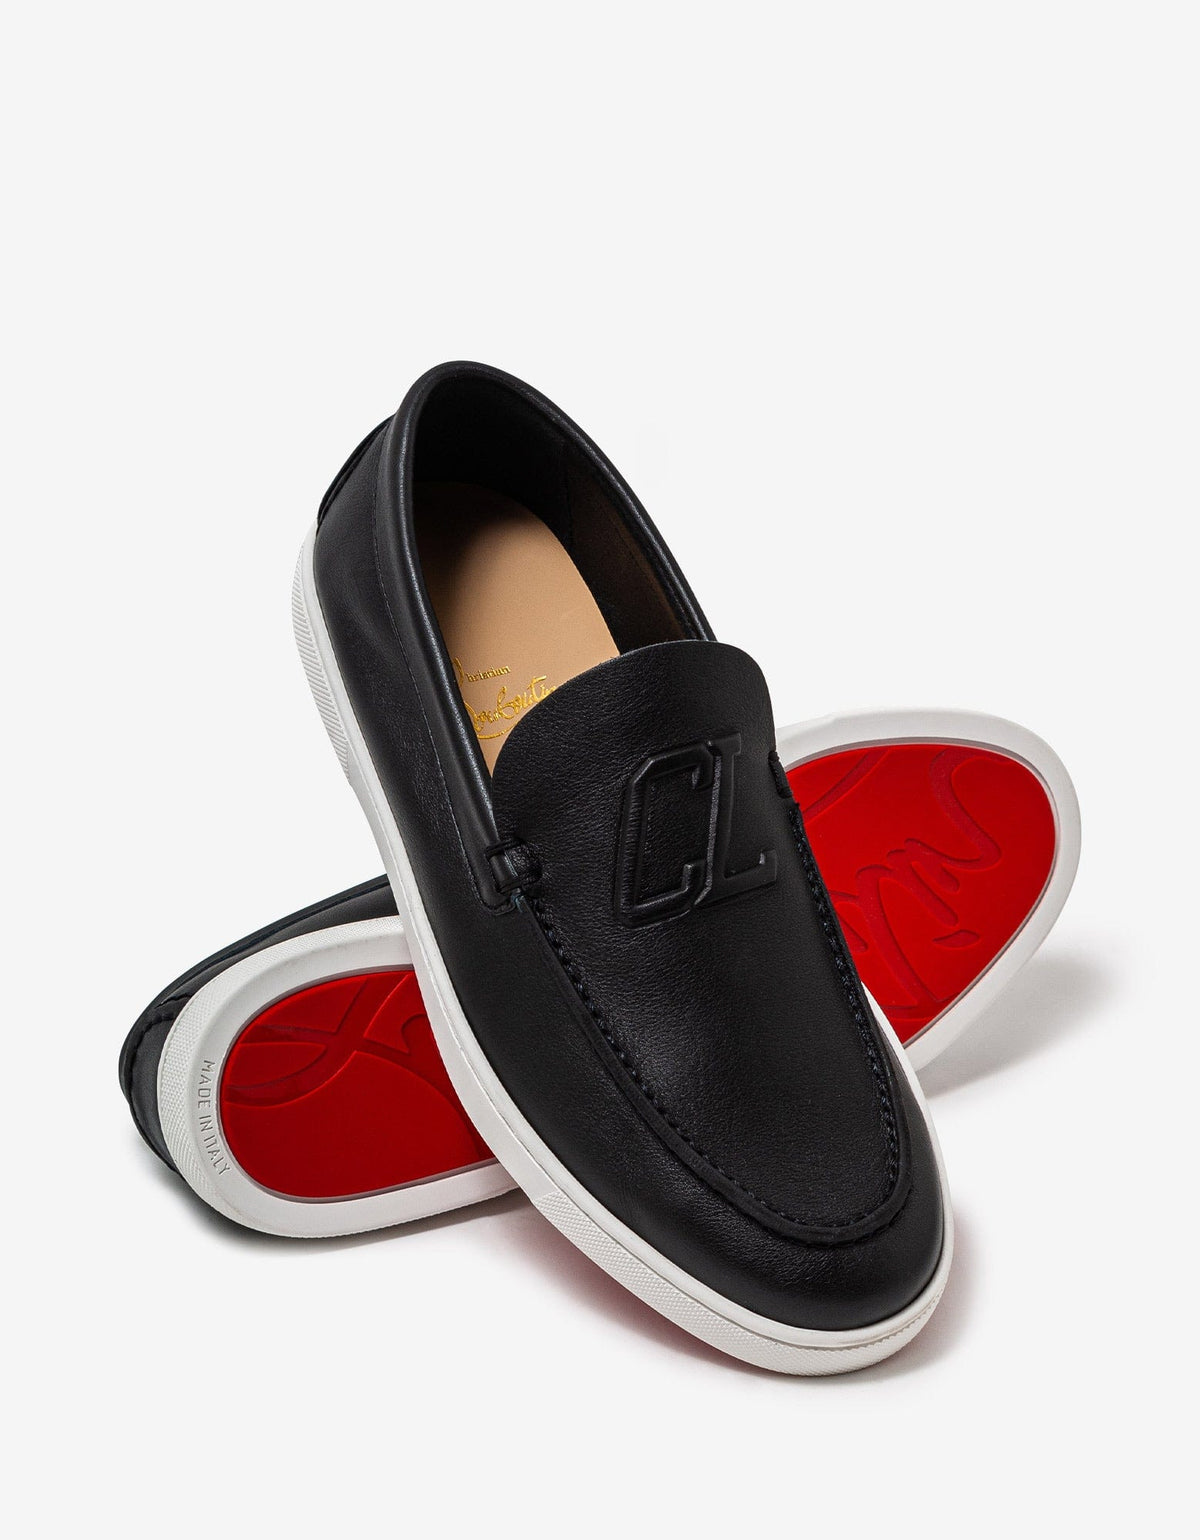 Christian Louboutin Varsiboat Black Leather Boat Shoes -